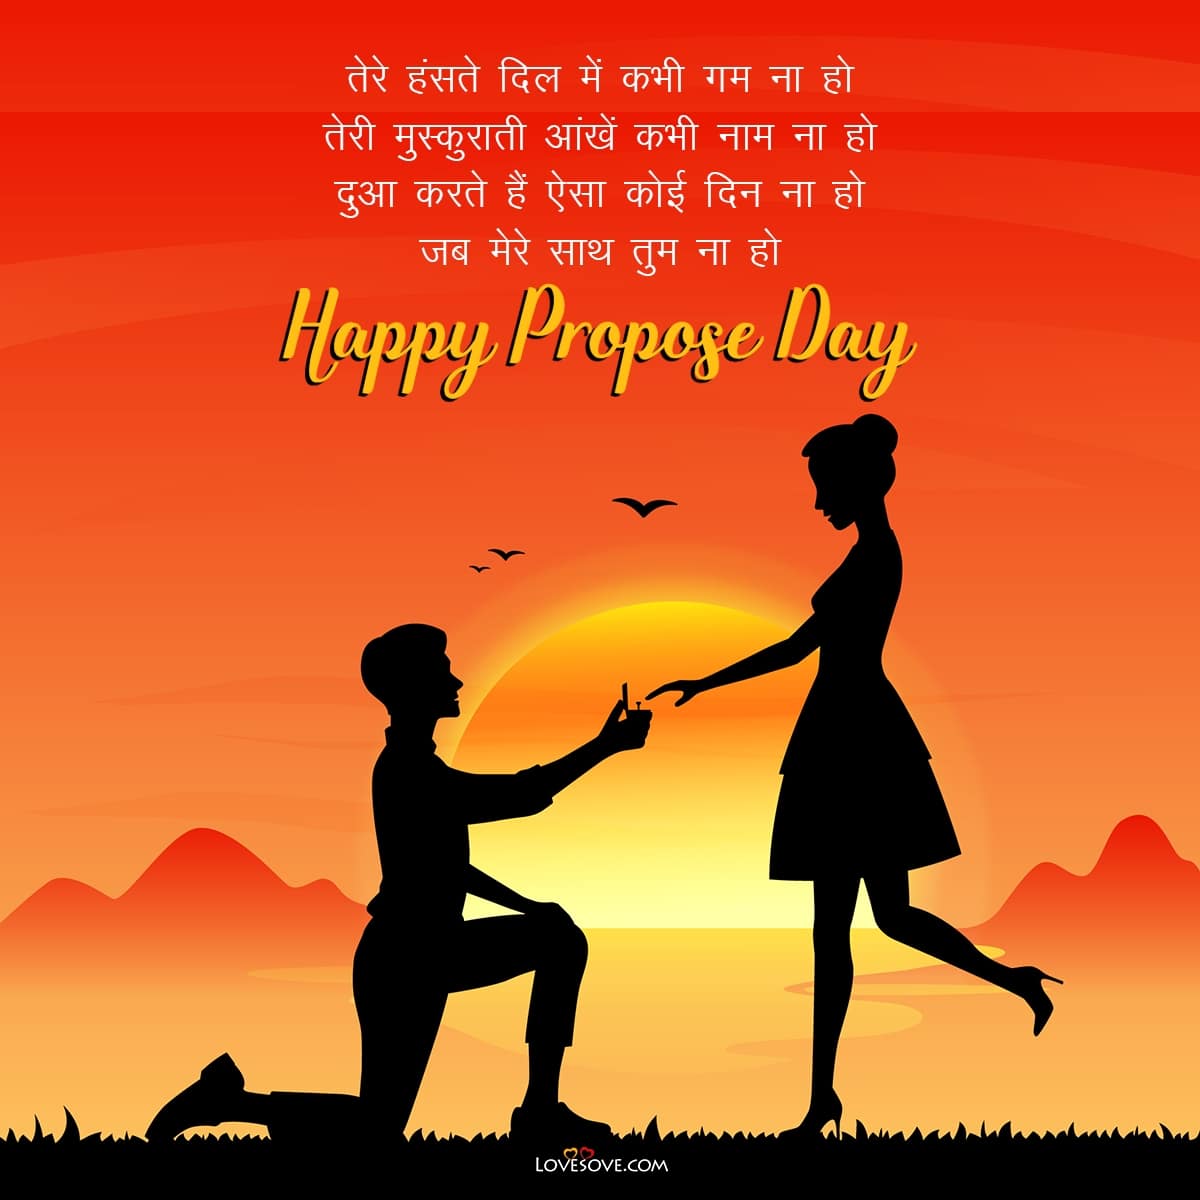 Happy propose day shayari in hindi text,Happy propose day shayari in hindi